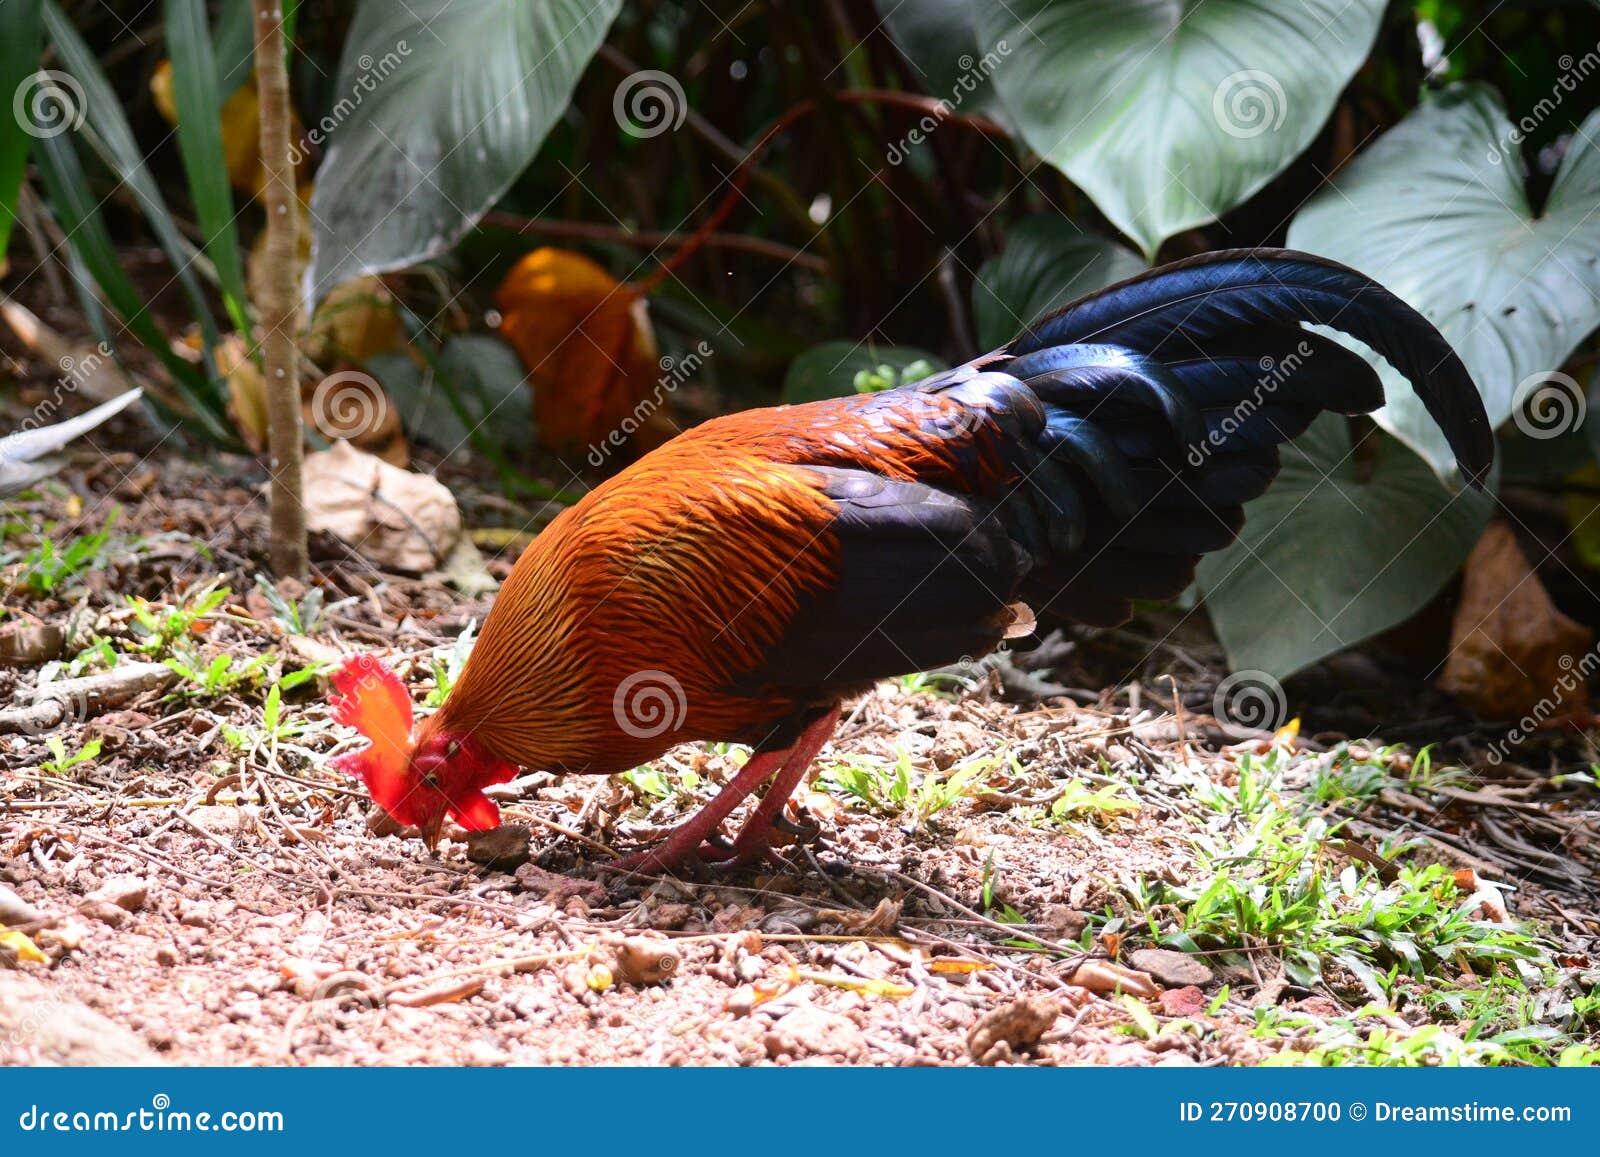 sri lankan wild lafayette rooster ,wali kukula - the ceylon junglefowl